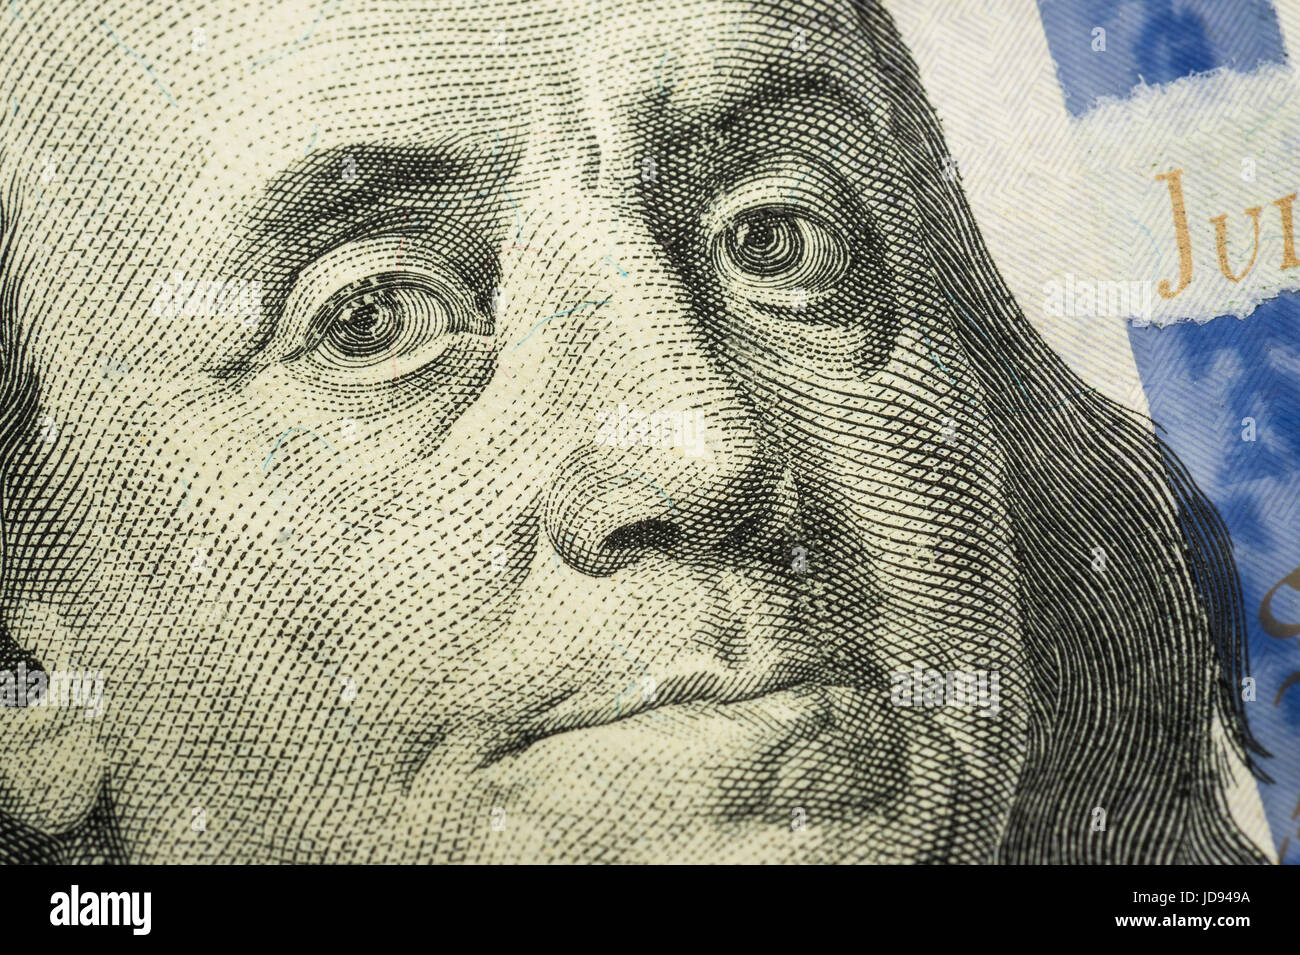 Ben Franklin Detail On US One Hundred Dollar Bill Stock Photo